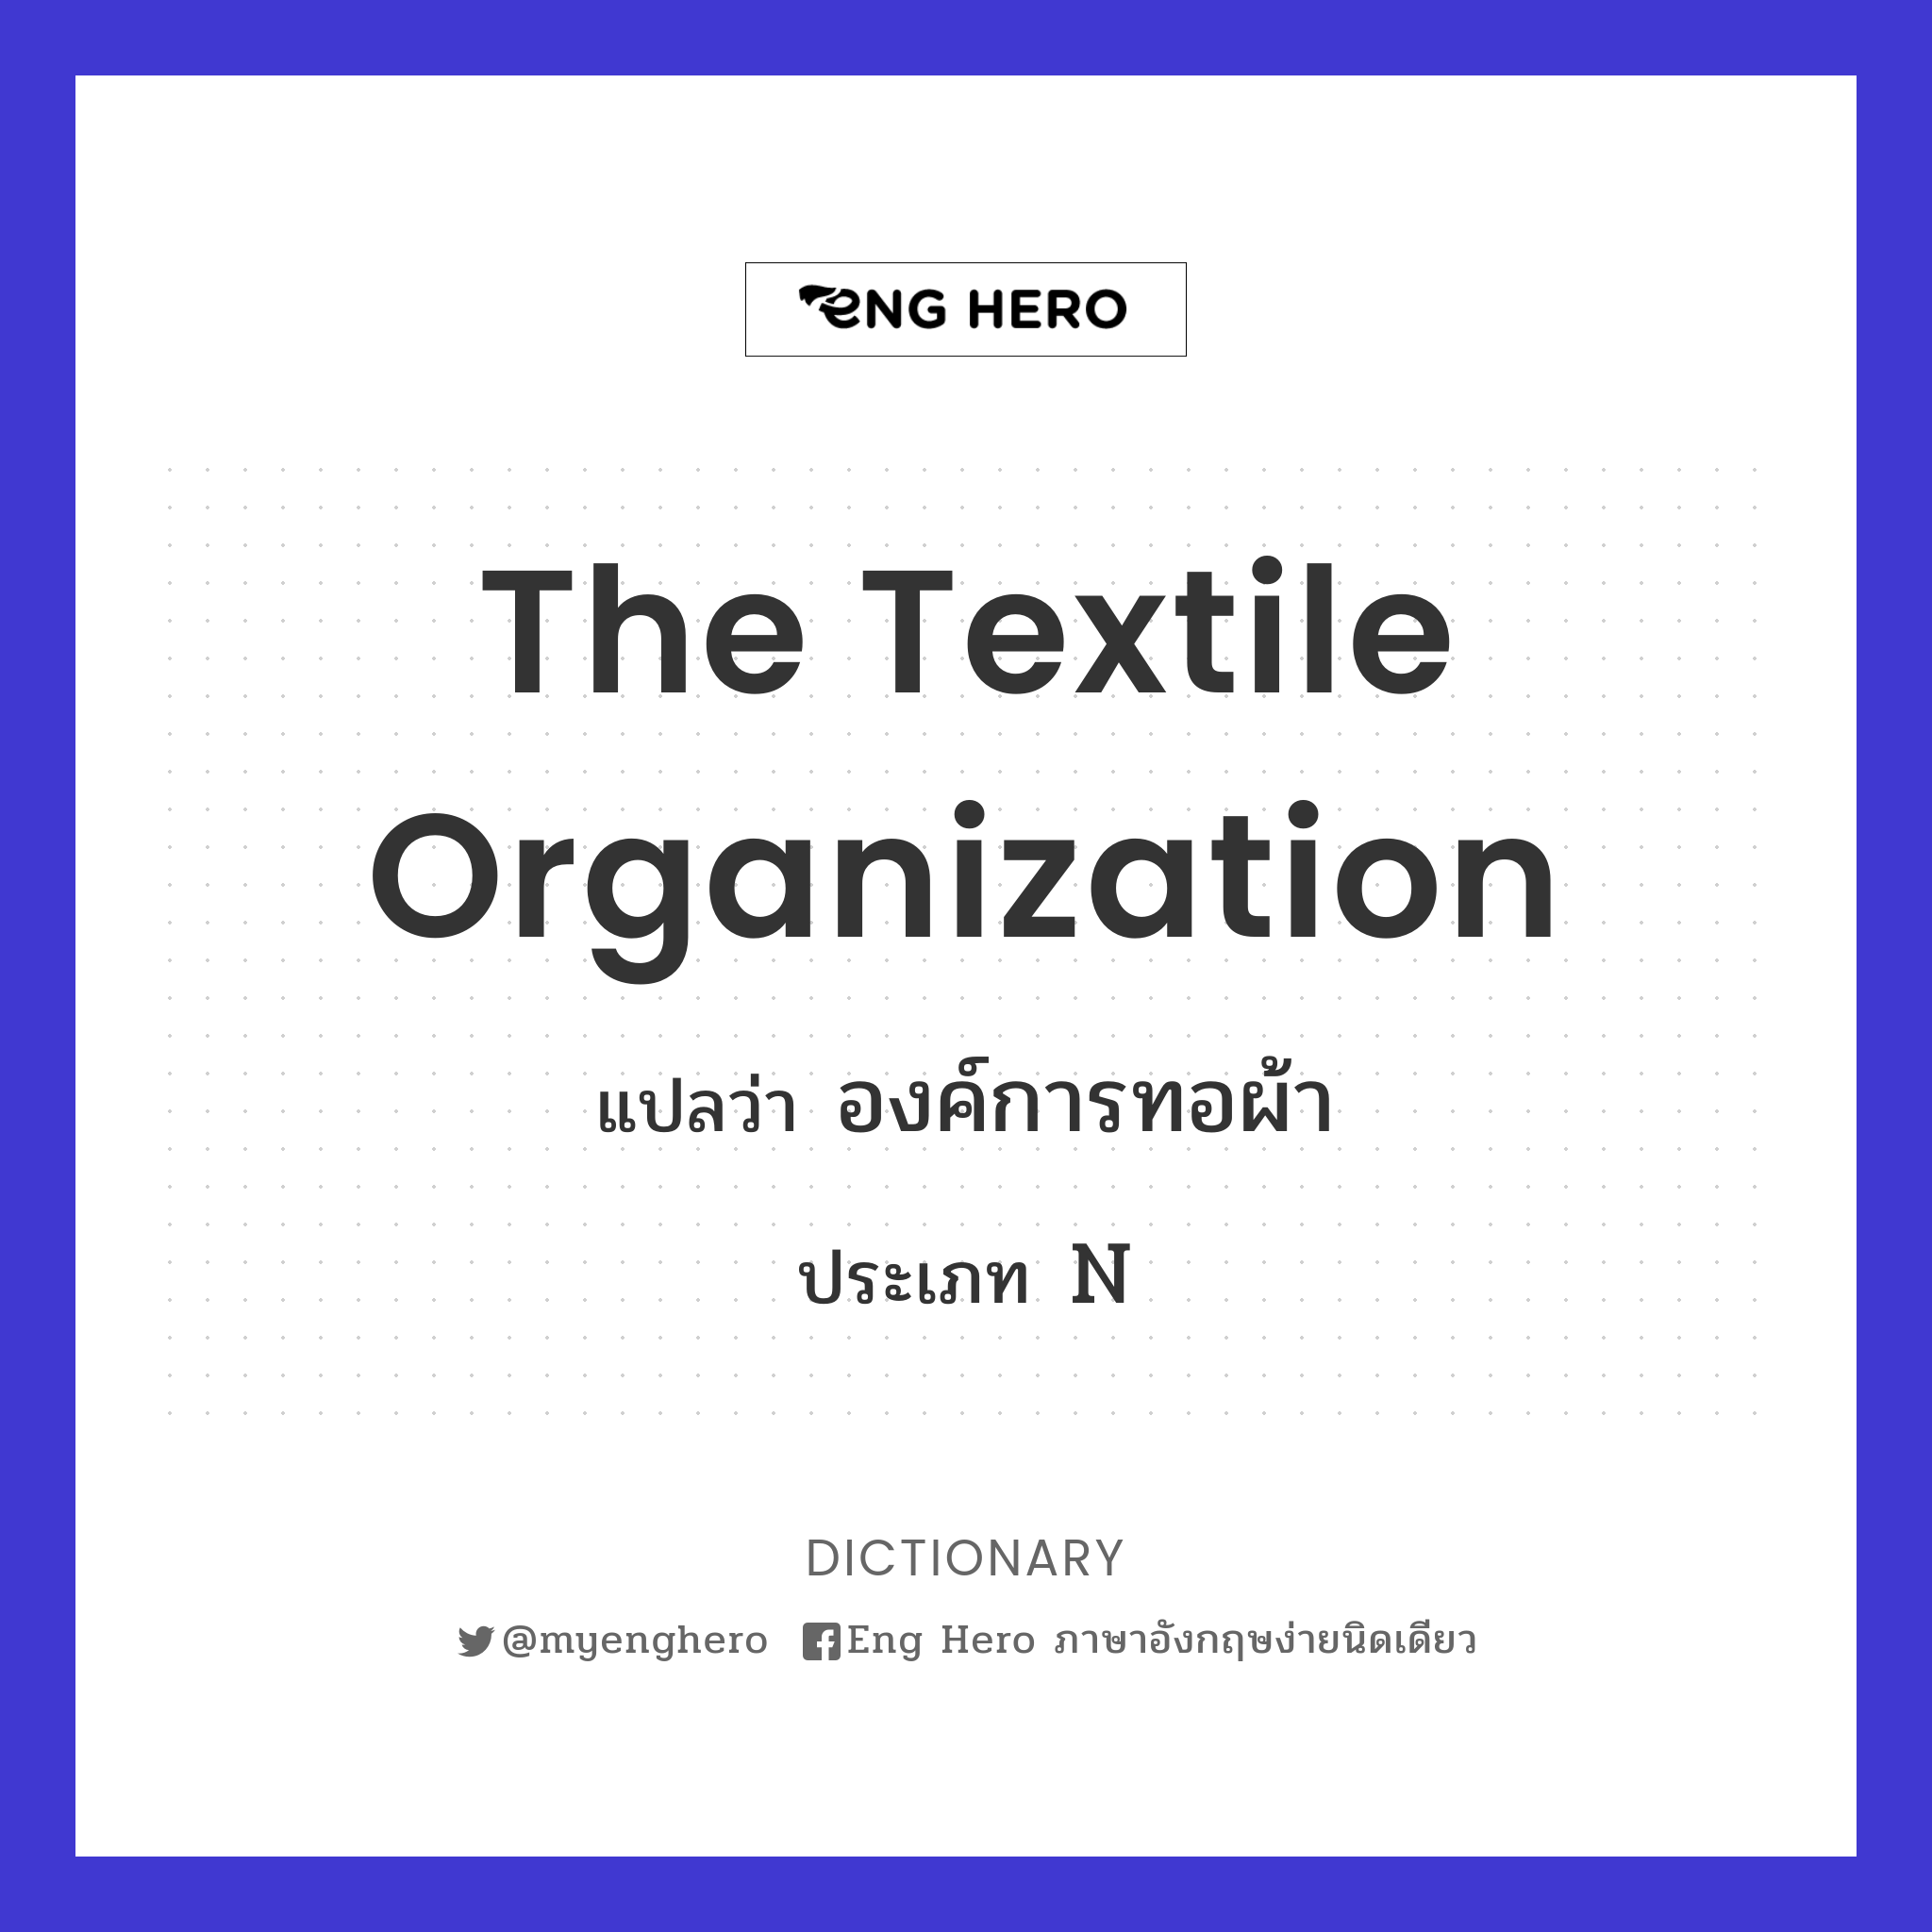 The Textile Organization